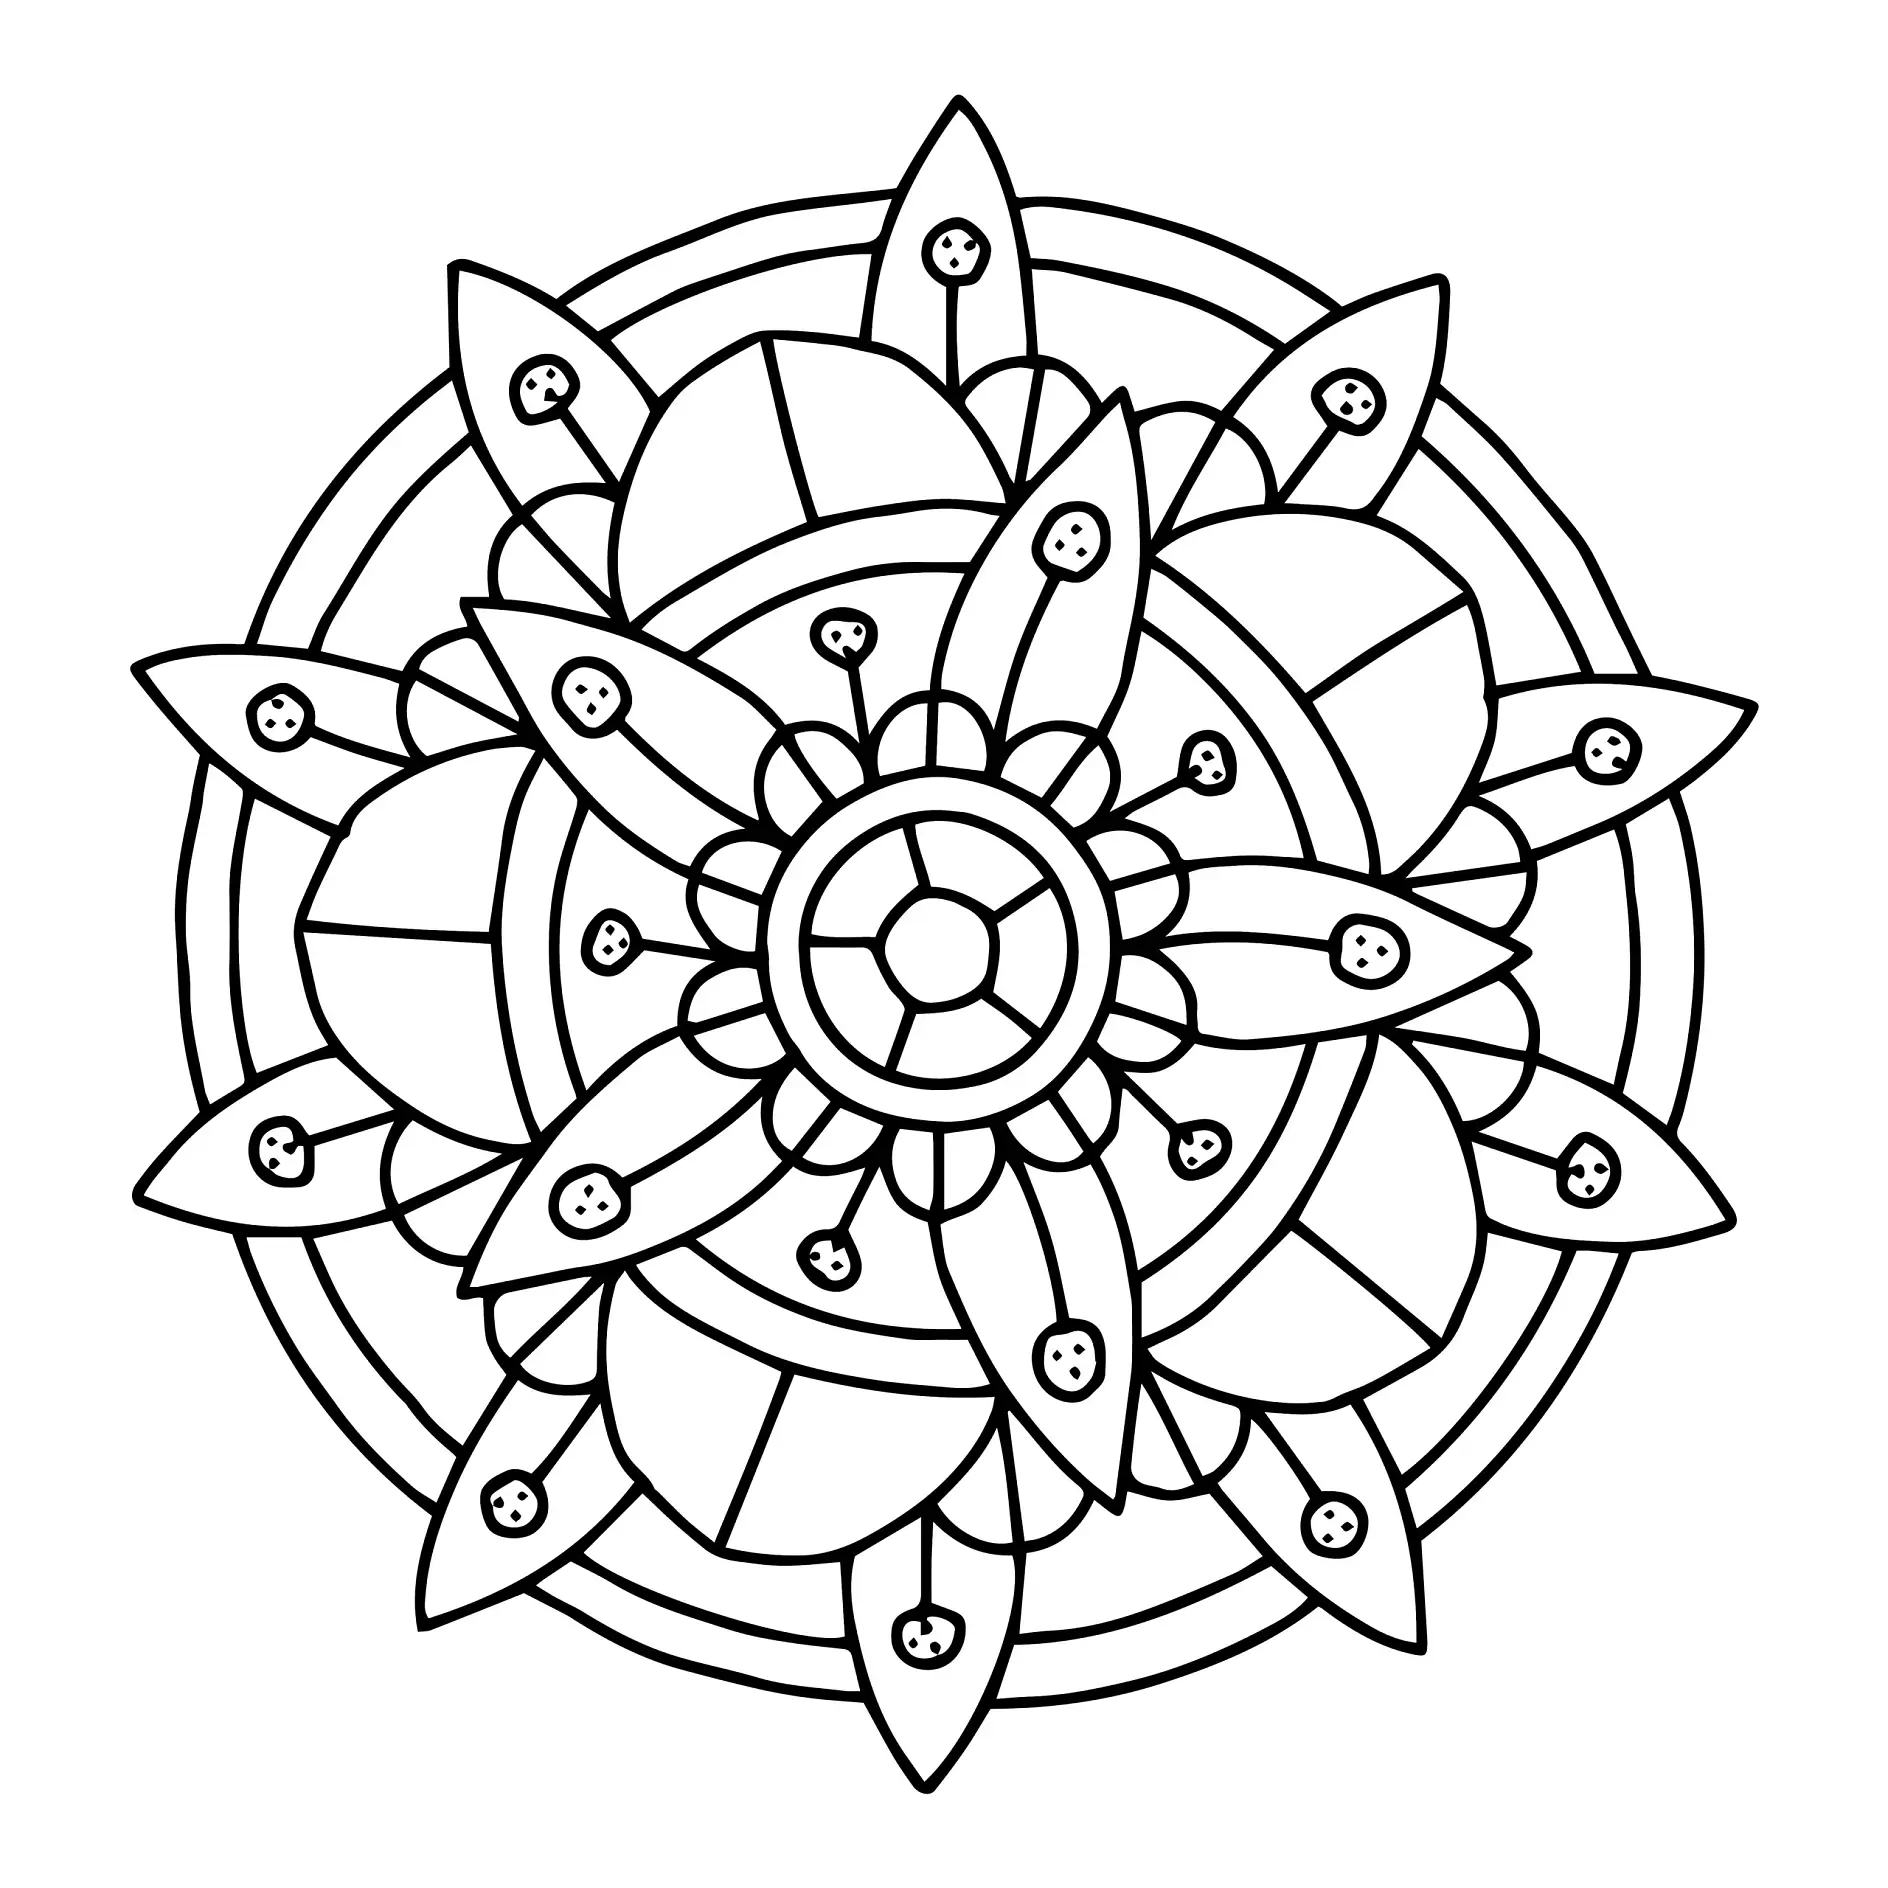 Ausmalbild Mandala mit Blumenmuster